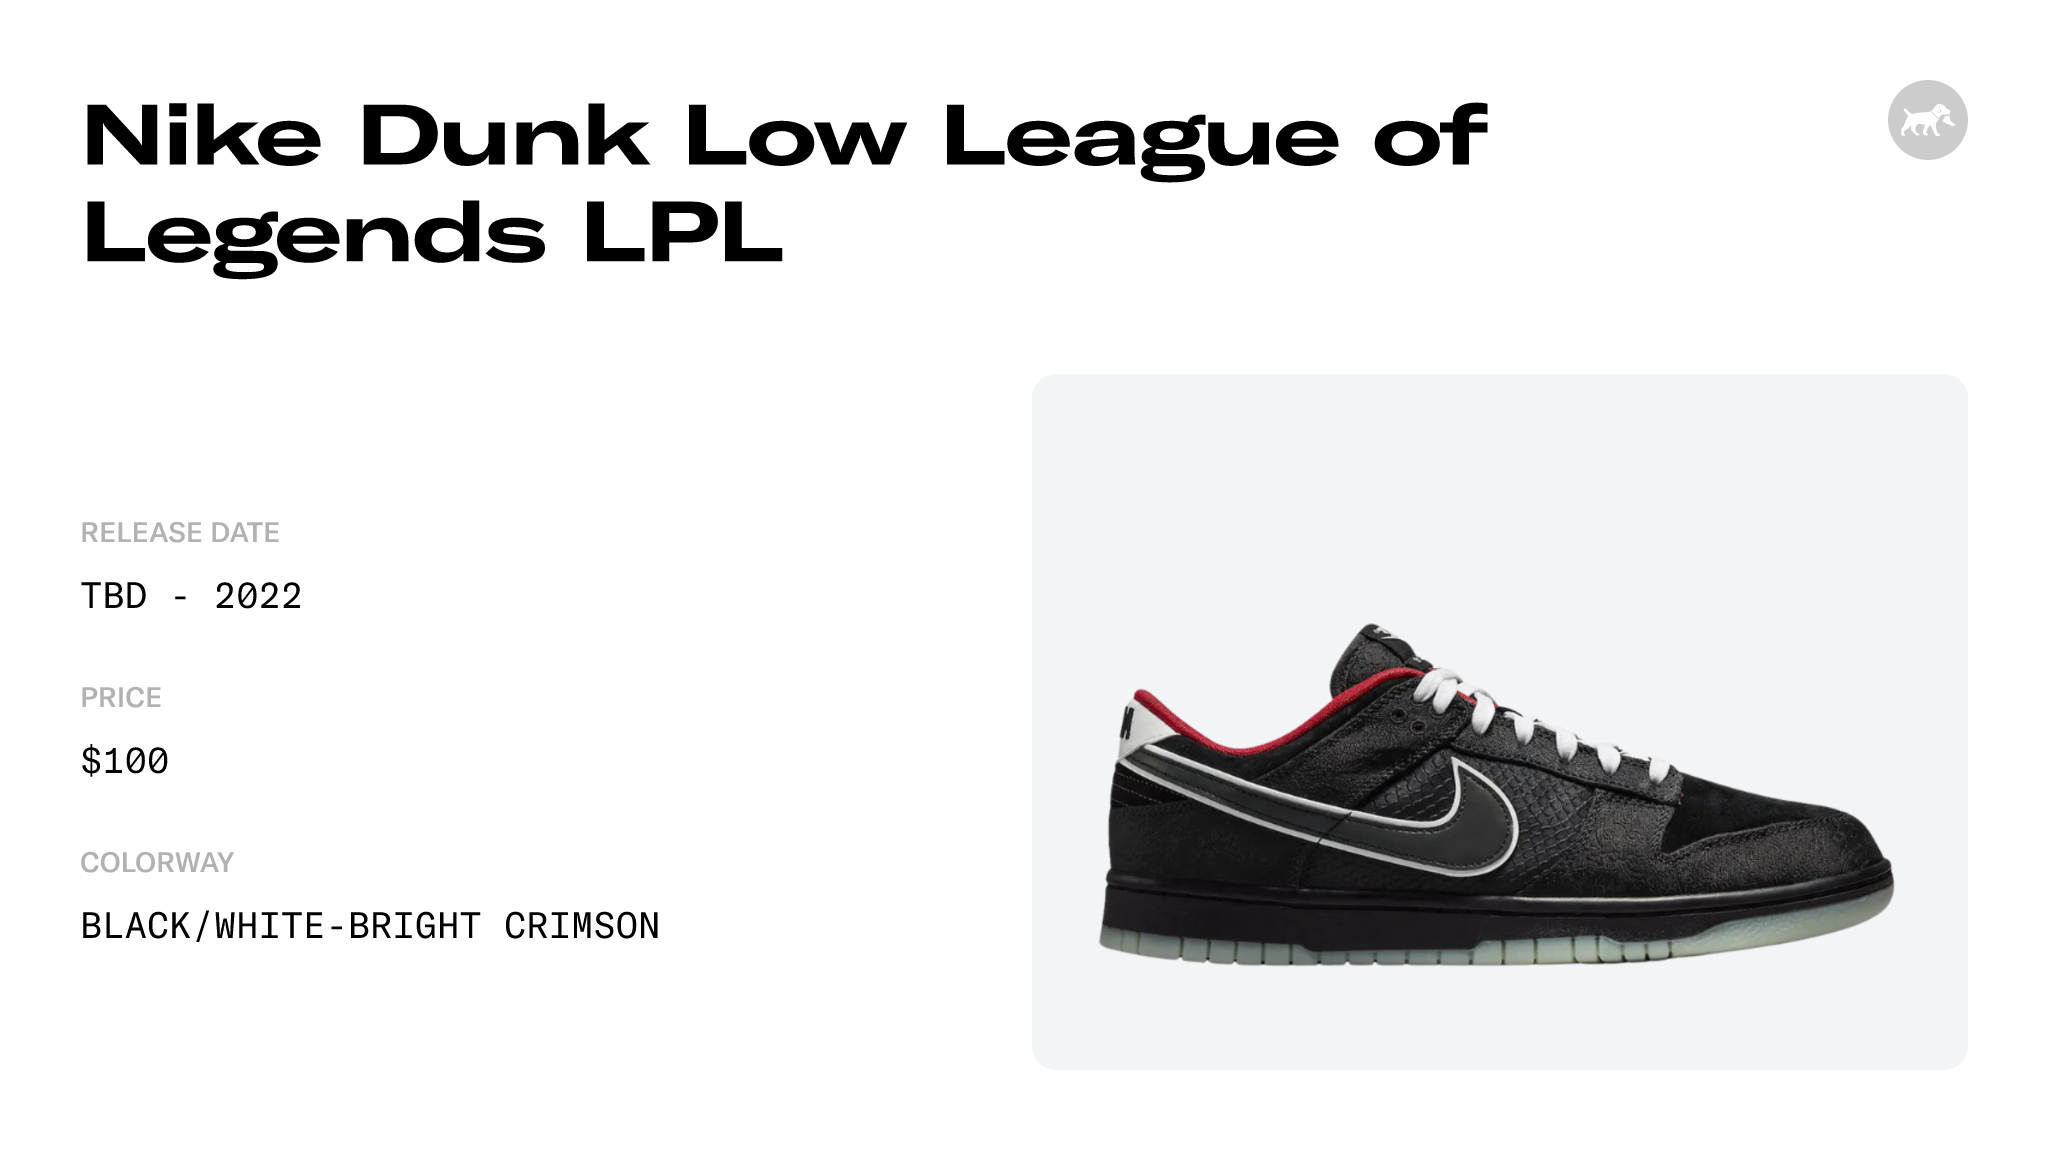 League of Legends LPL x Nike Dunk Low On-Foot